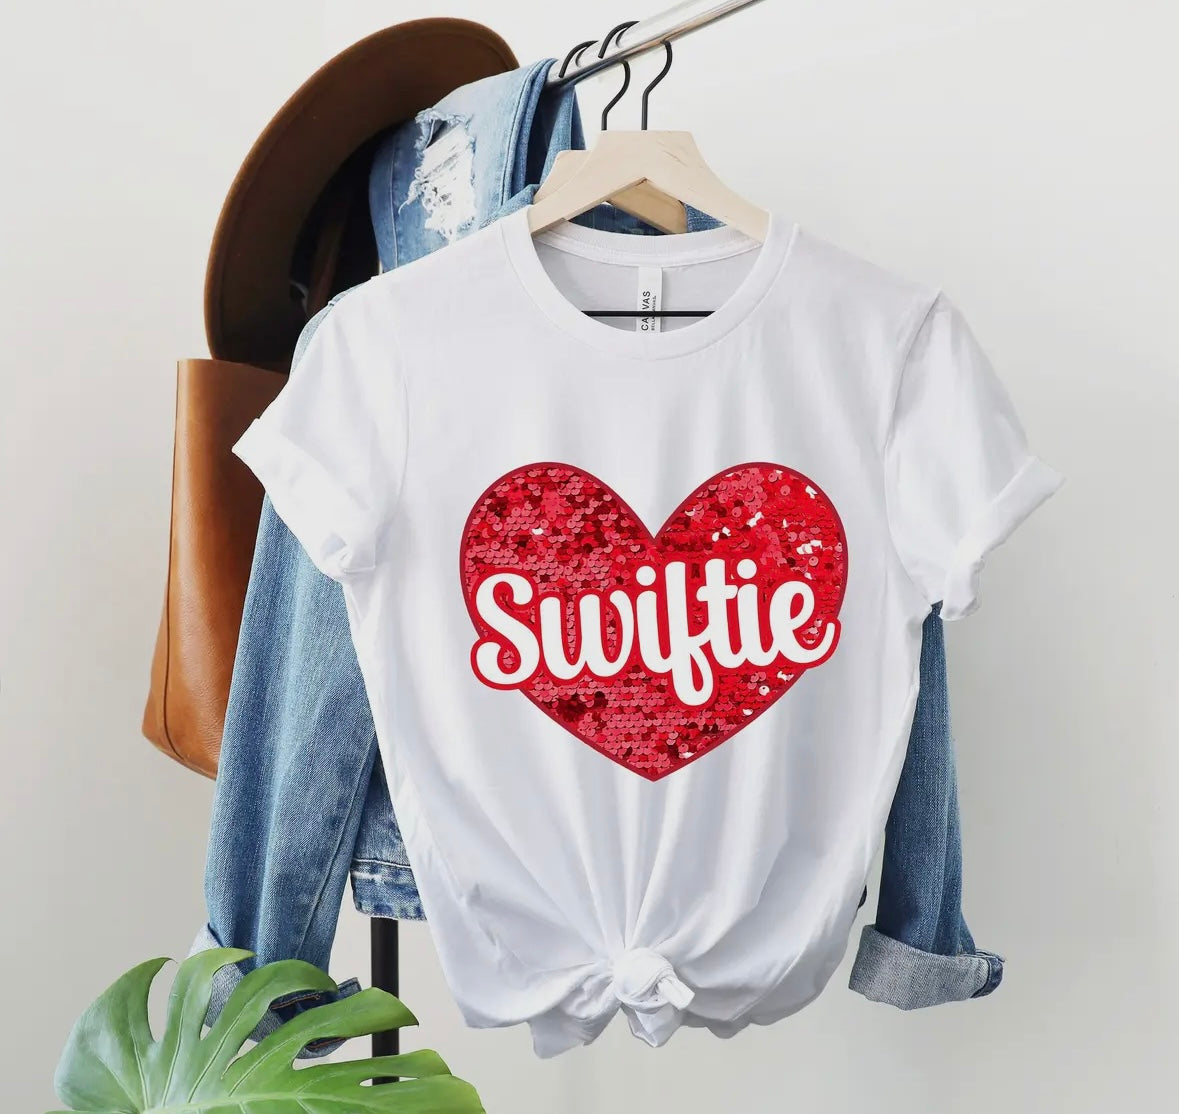 Swiftie Heart T Shirt - White